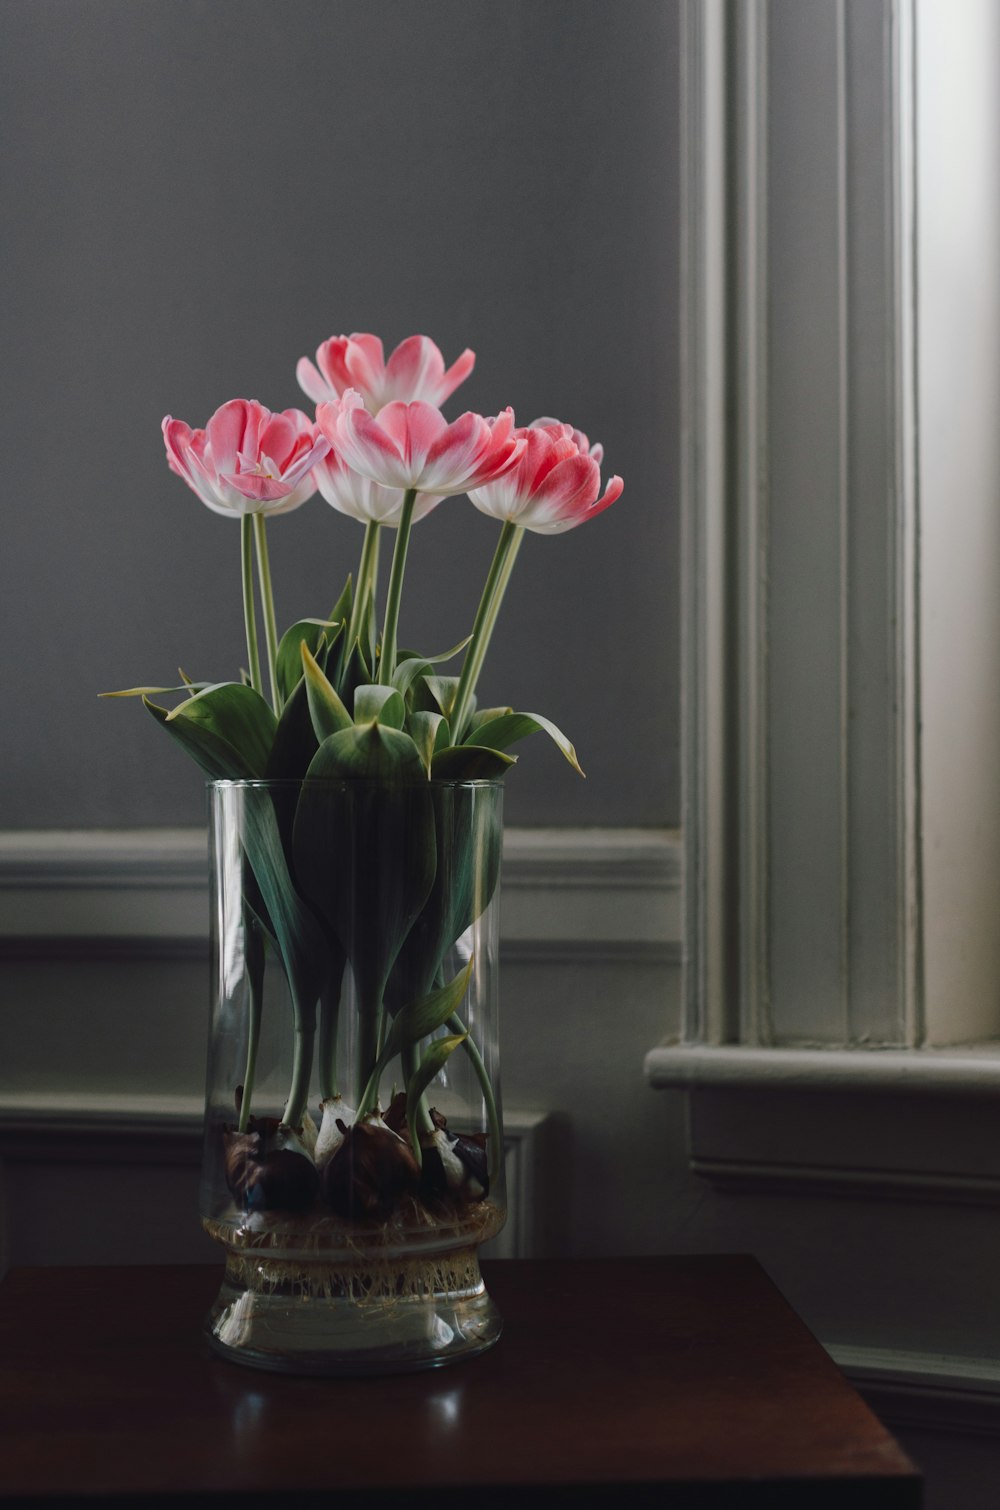 500+ Flower Pot Pictures [HD] | Download Free Images on Unsplash